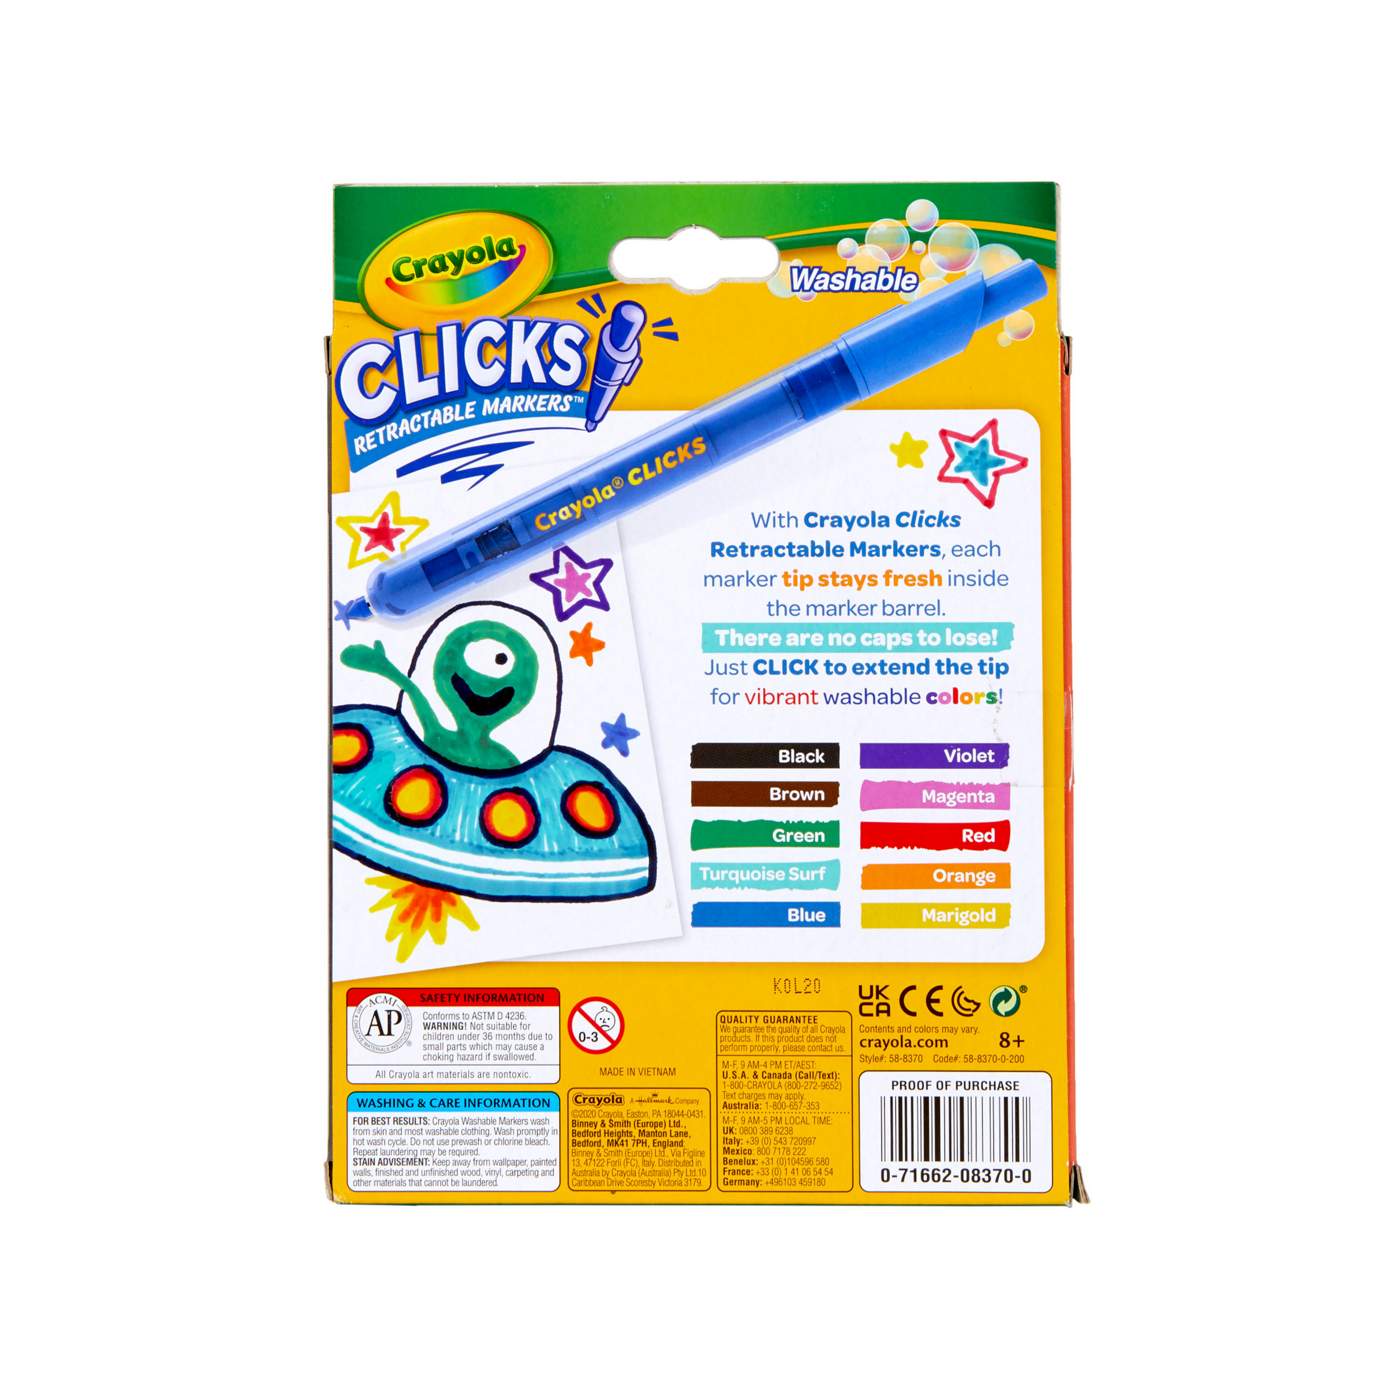 Crayola Clicks Retractable Washable Markers; image 3 of 3